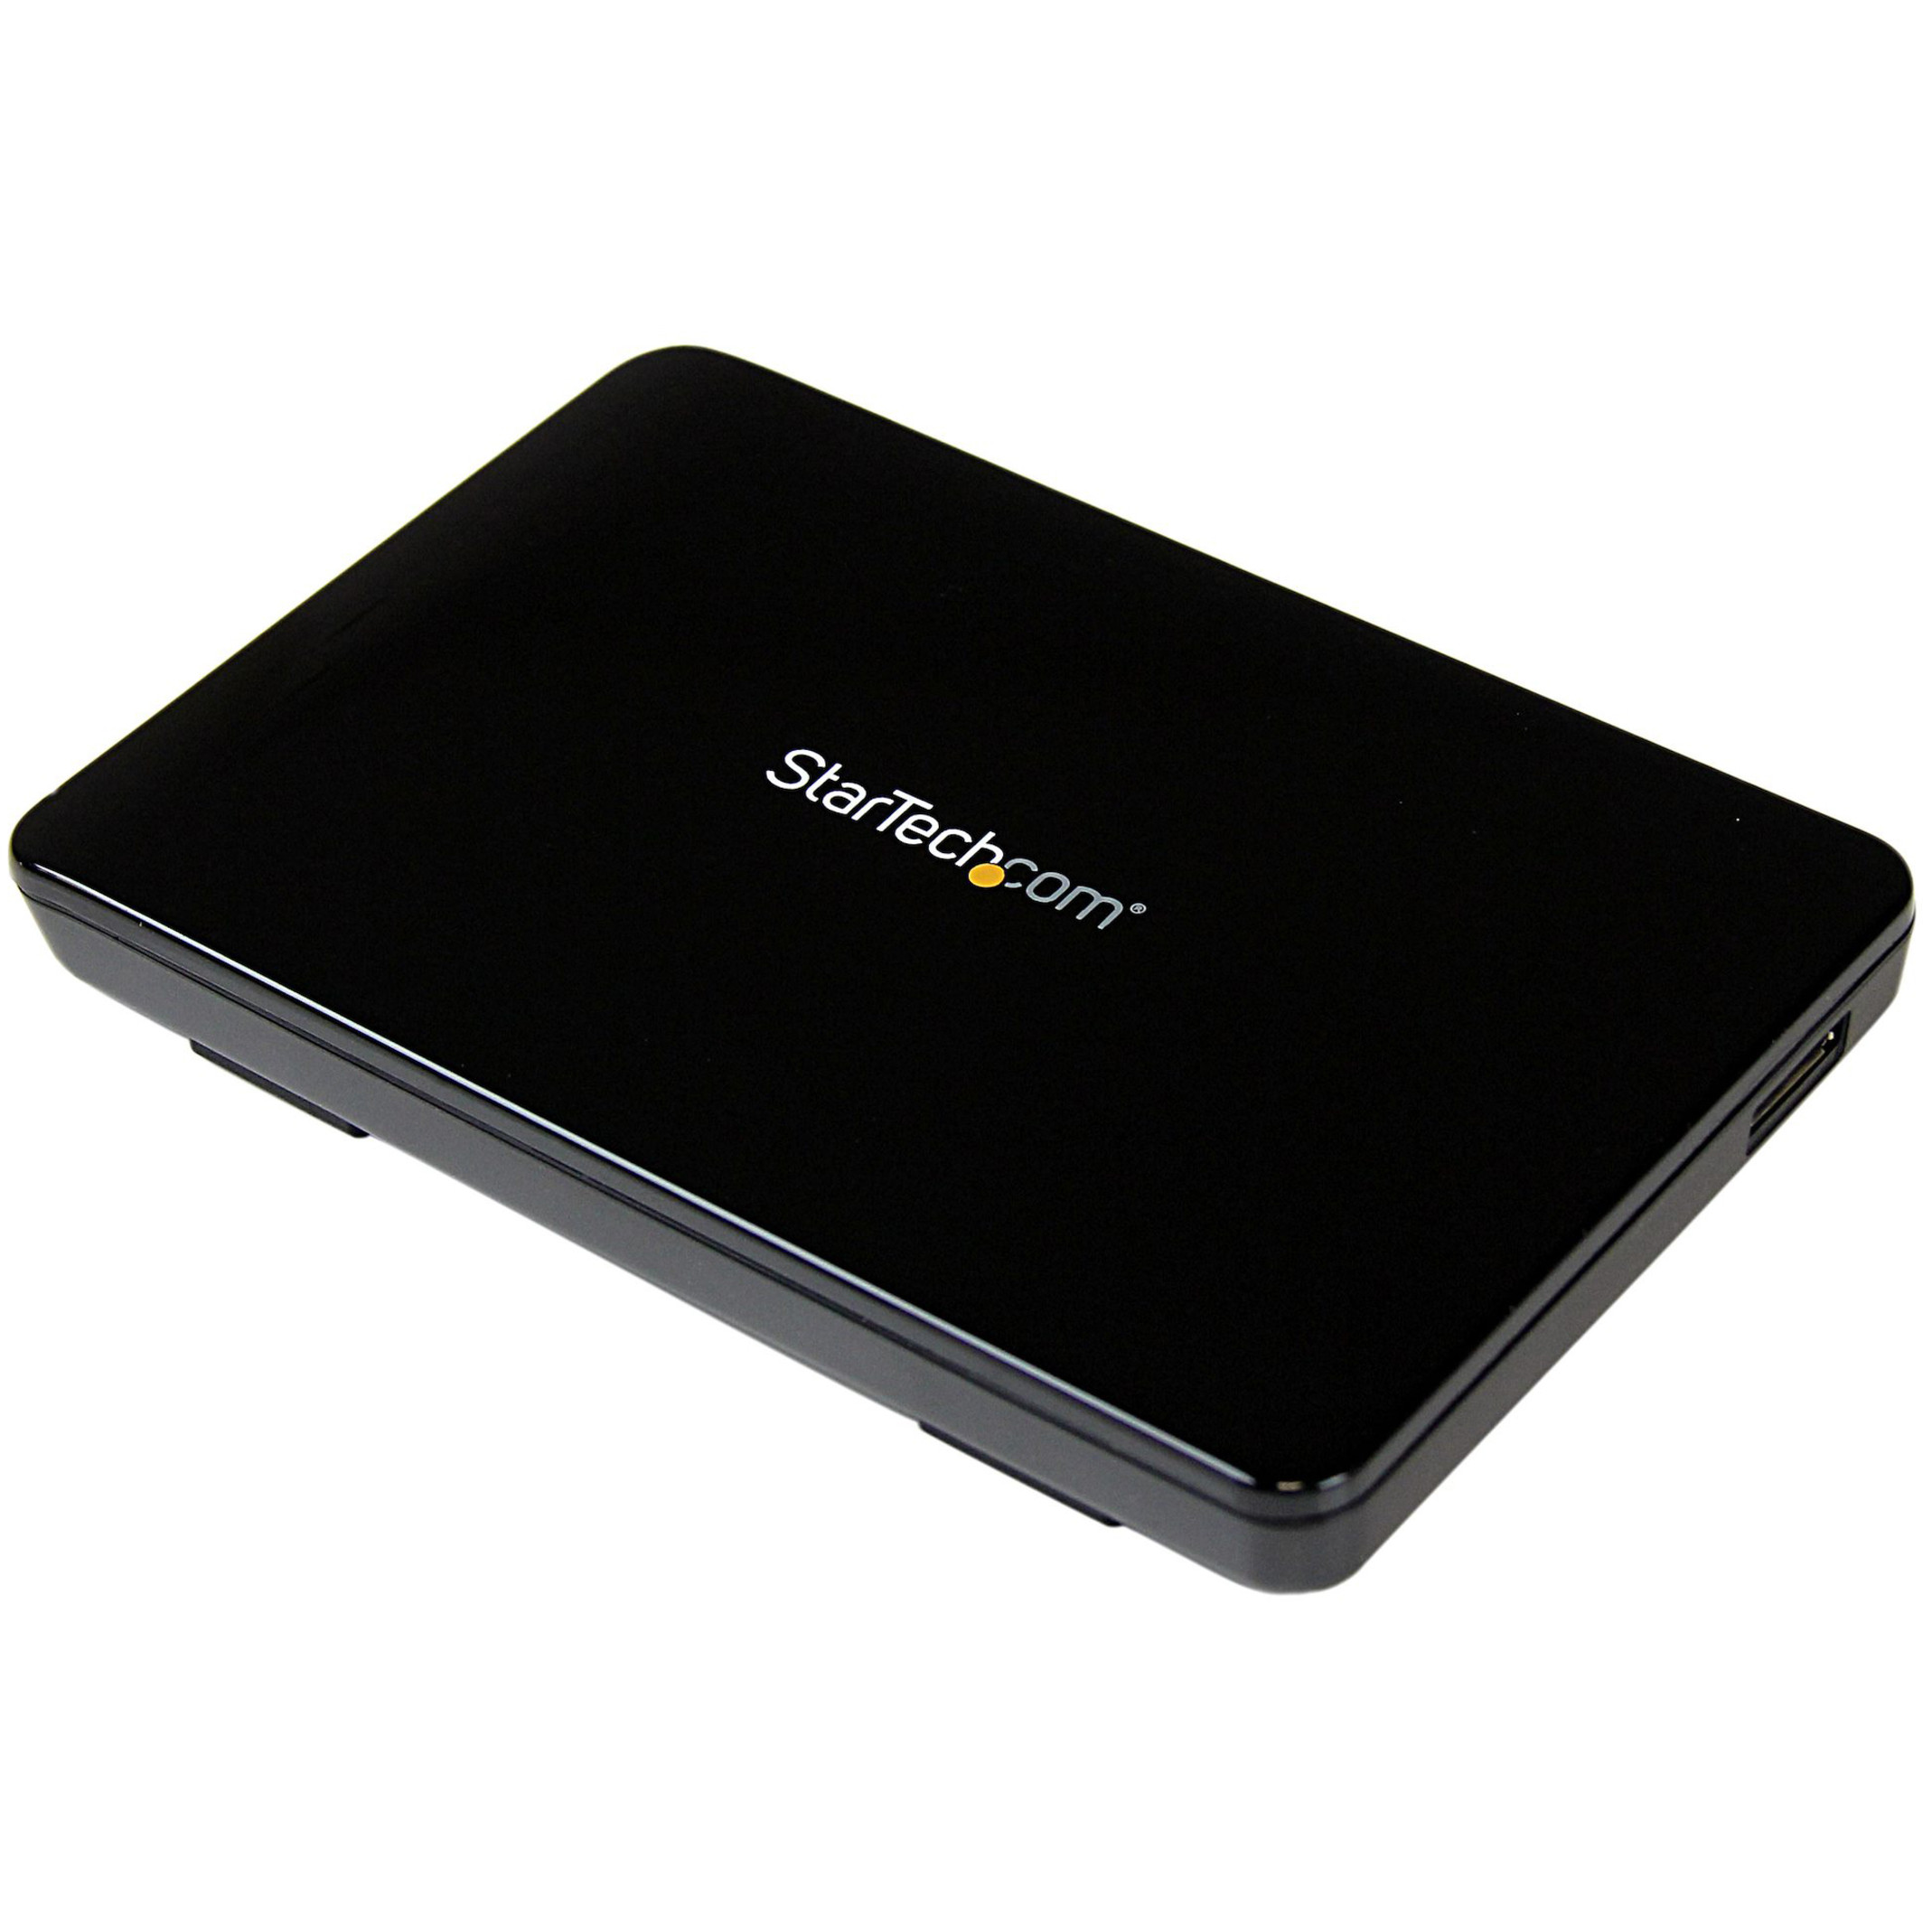 Startech .com 2.5in USB 3.0 External SATA III SSD Hard Drive Enclosure with UASPPortable External HDDTurn a 2.5″ SATA Hard Drive or Soli… S2510BPU33